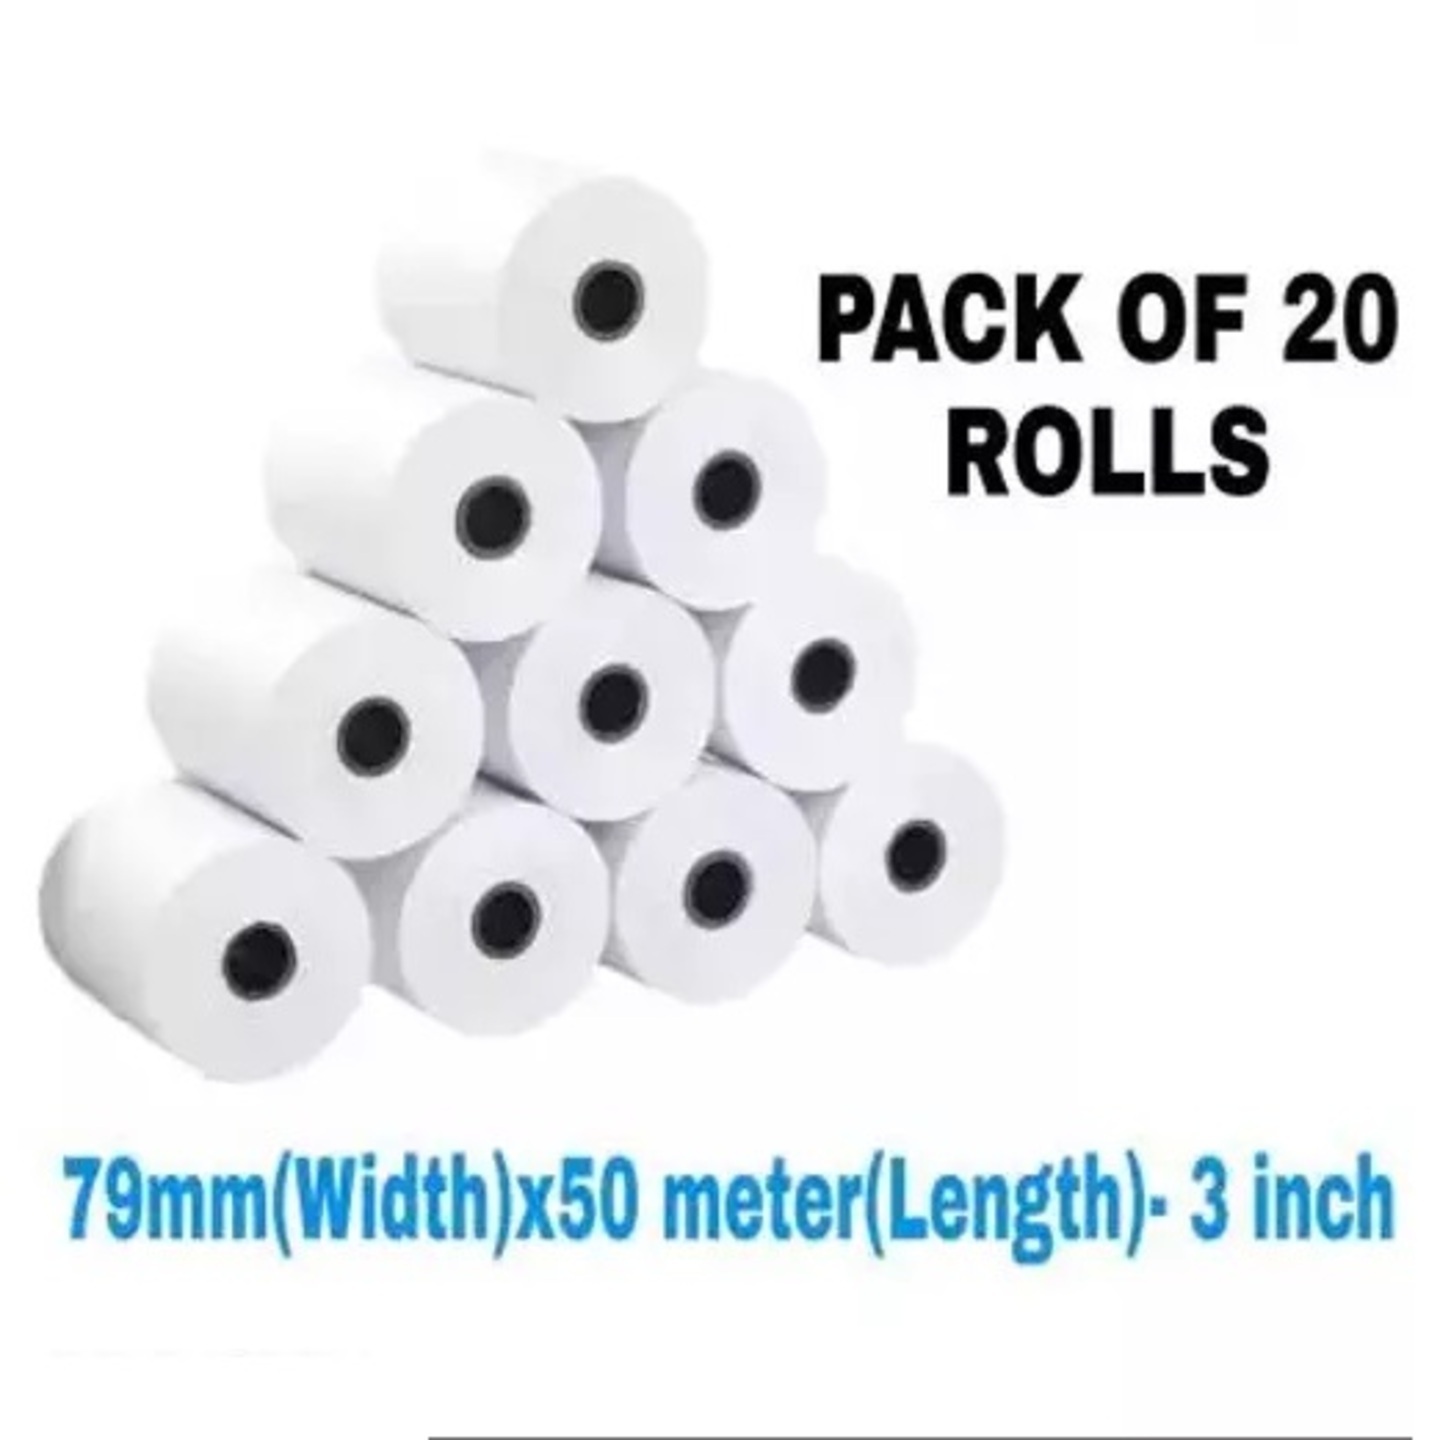 3 Inch Pos Machine Thermal Paper Rolls- 79mm x 50 meter - Set of 20 Rolls